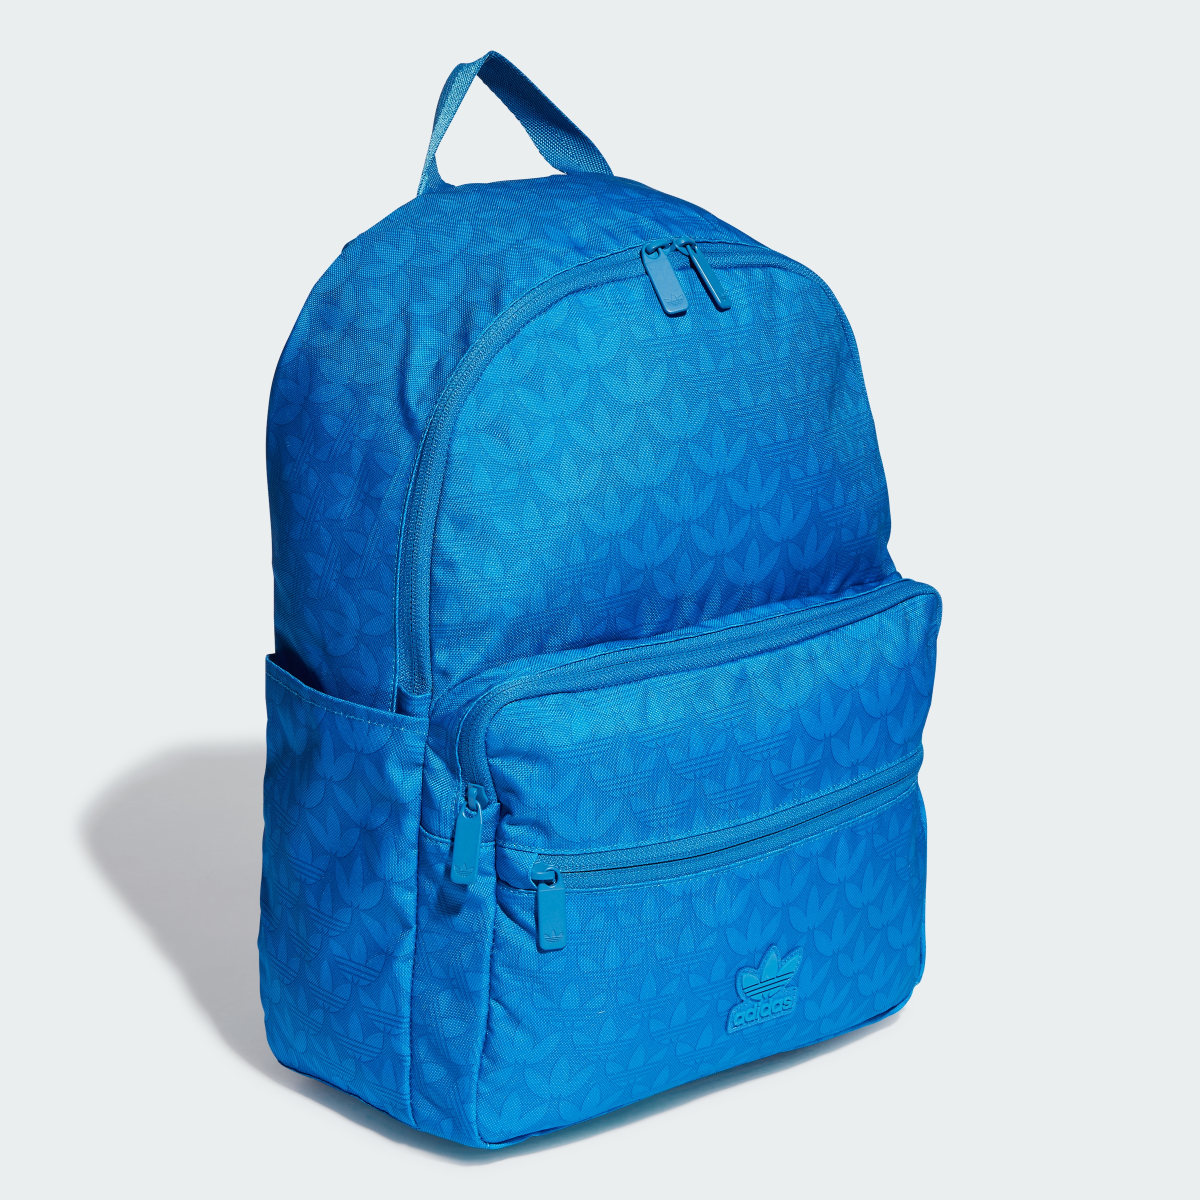 Adidas Monogram Classic Backpack. 4